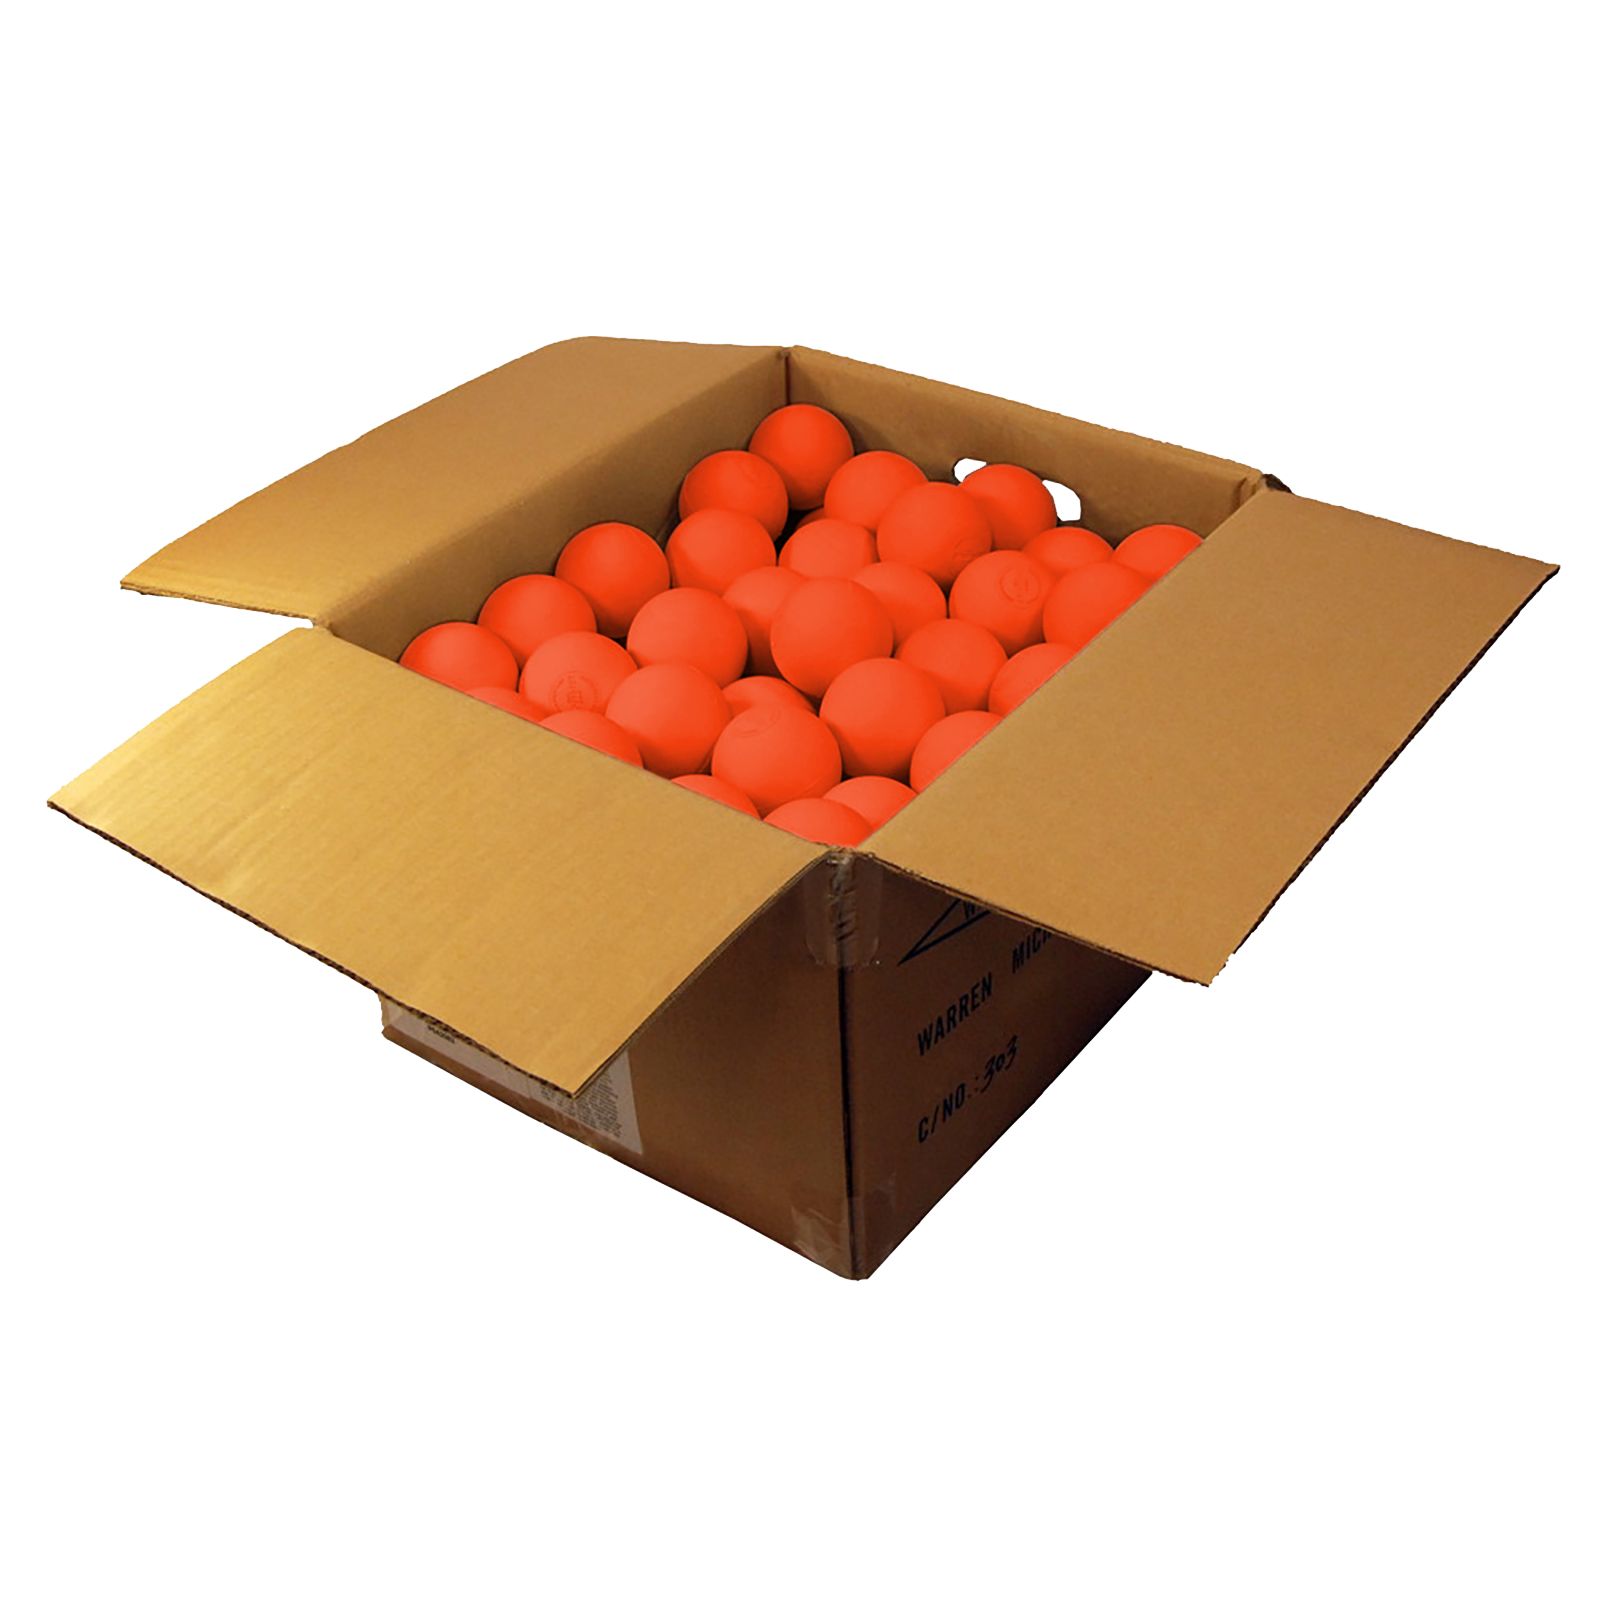 120 NOCSAE/NFHS Balls, Orange image number 0